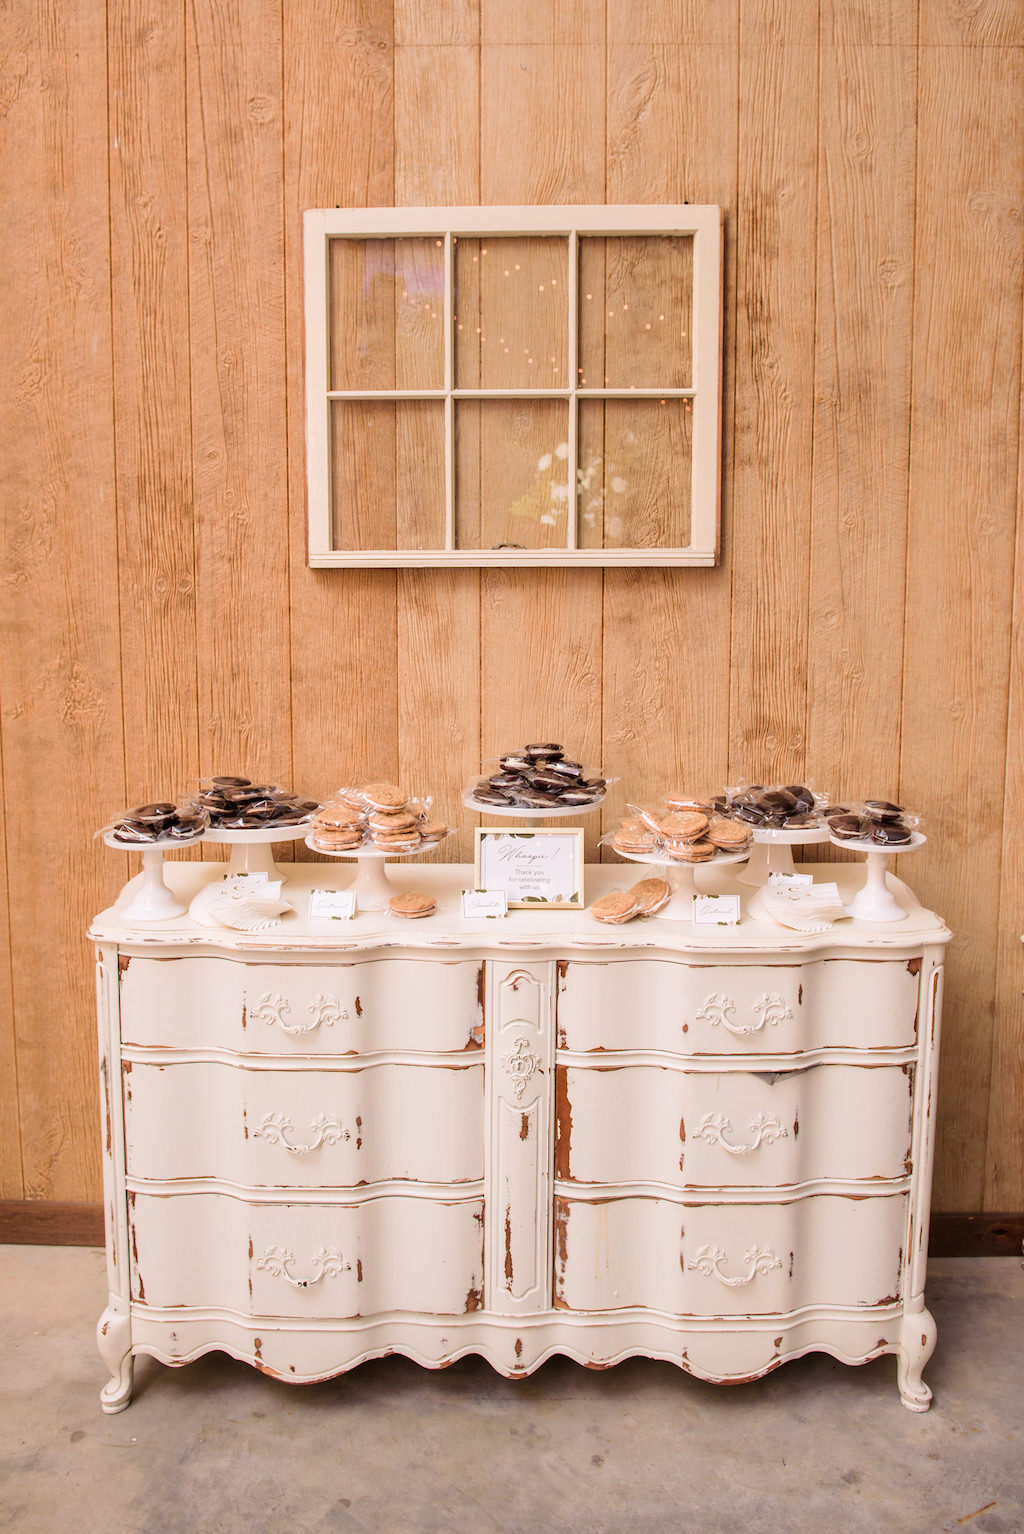 Rustic Country Chic Wedding Reception Decor, Antique White Dresser Dessert Table | Tampa Bay Luxury Wedding Planner Parties A'La Carte